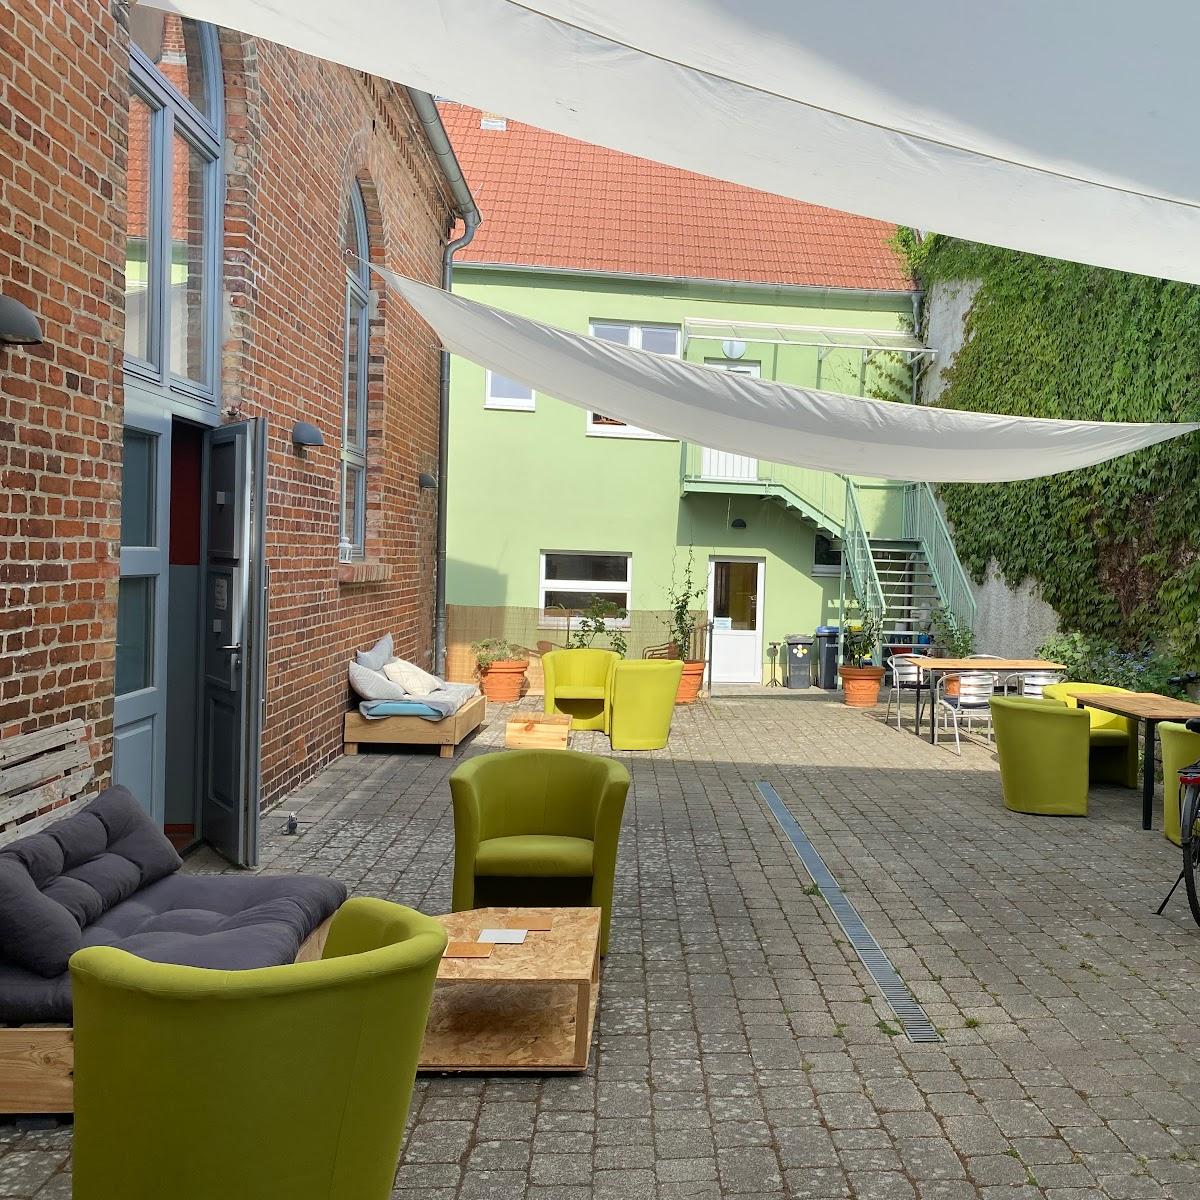 Restaurant "Altes Kino" in Lychen